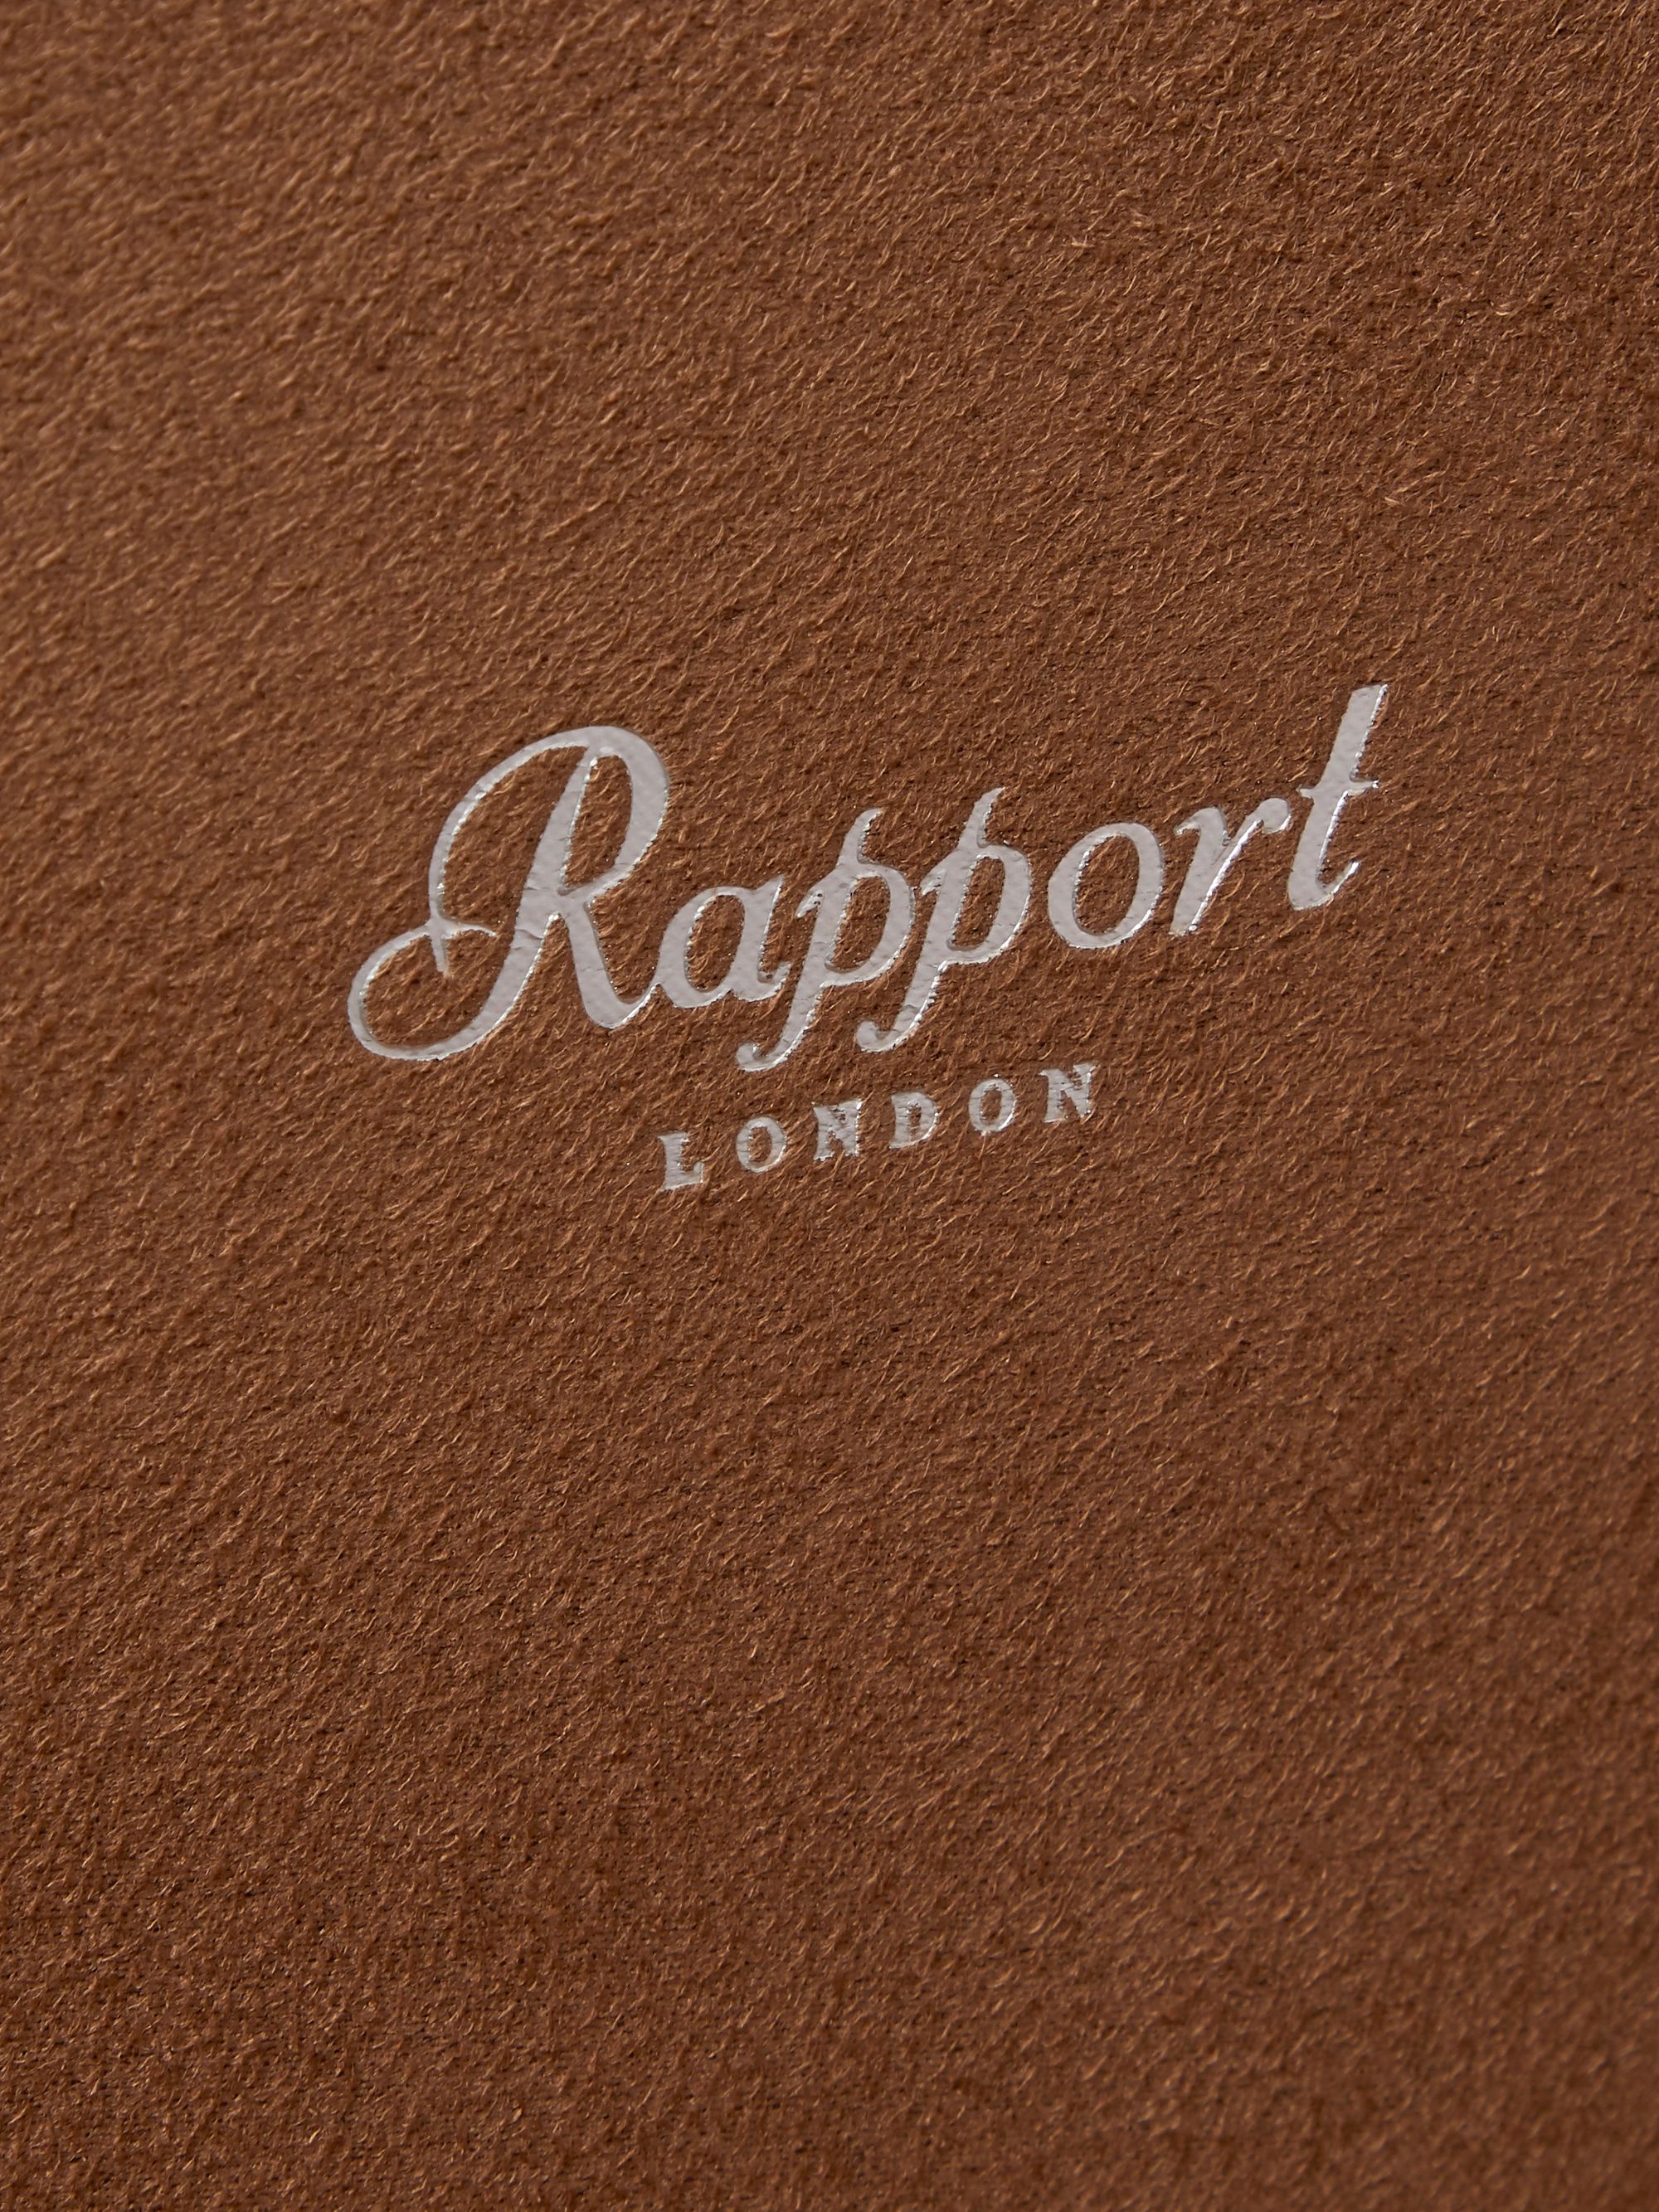 RAPPORT LONDON Lacquered Cedar Watch Box